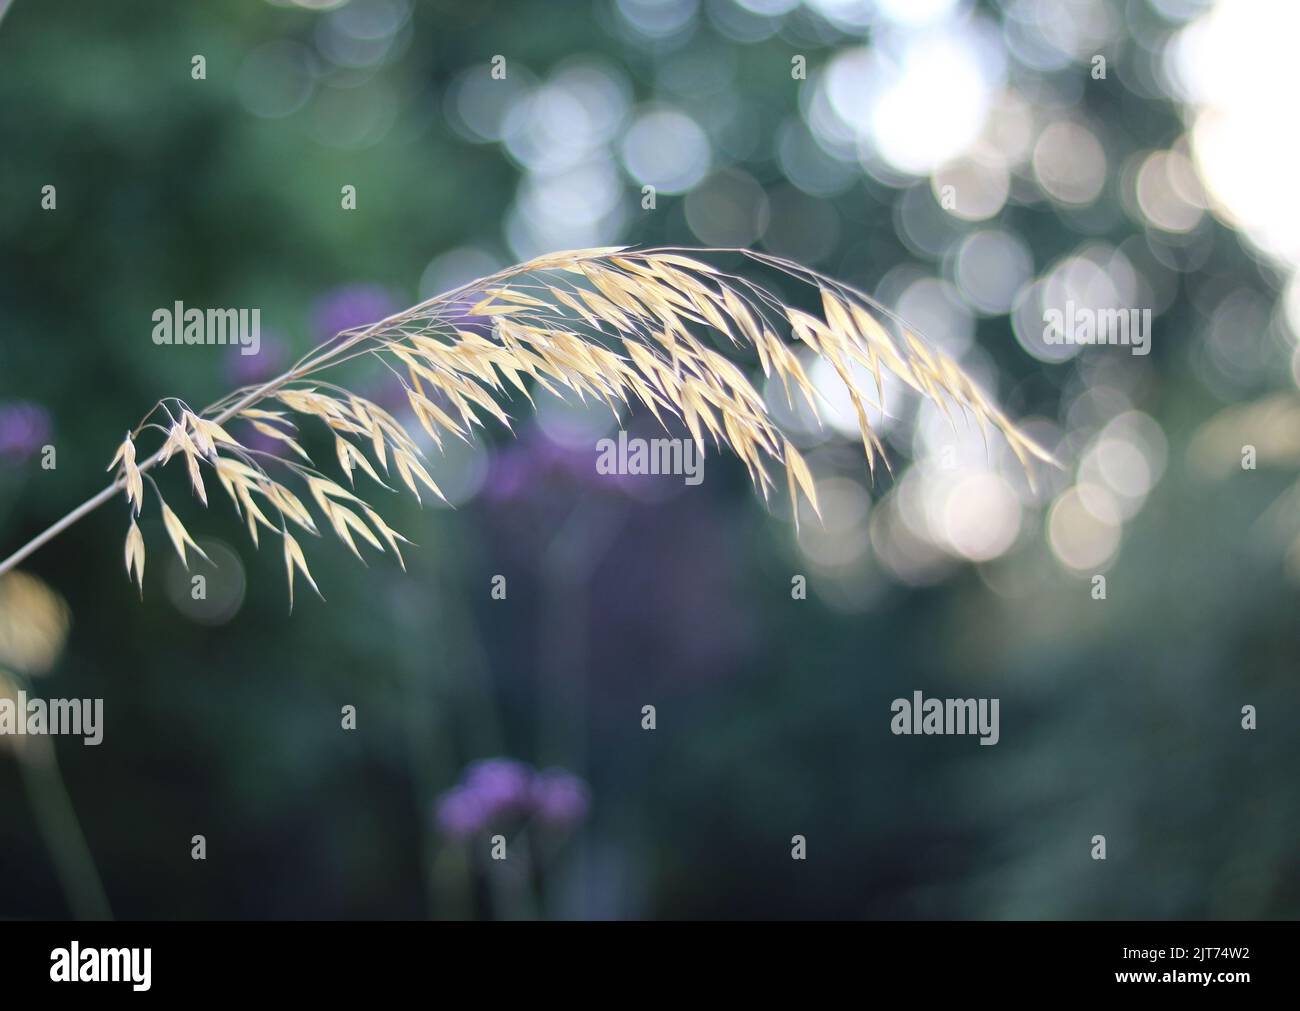 Ornamental grass in autumn against soft green blurred garden background Stock Photo